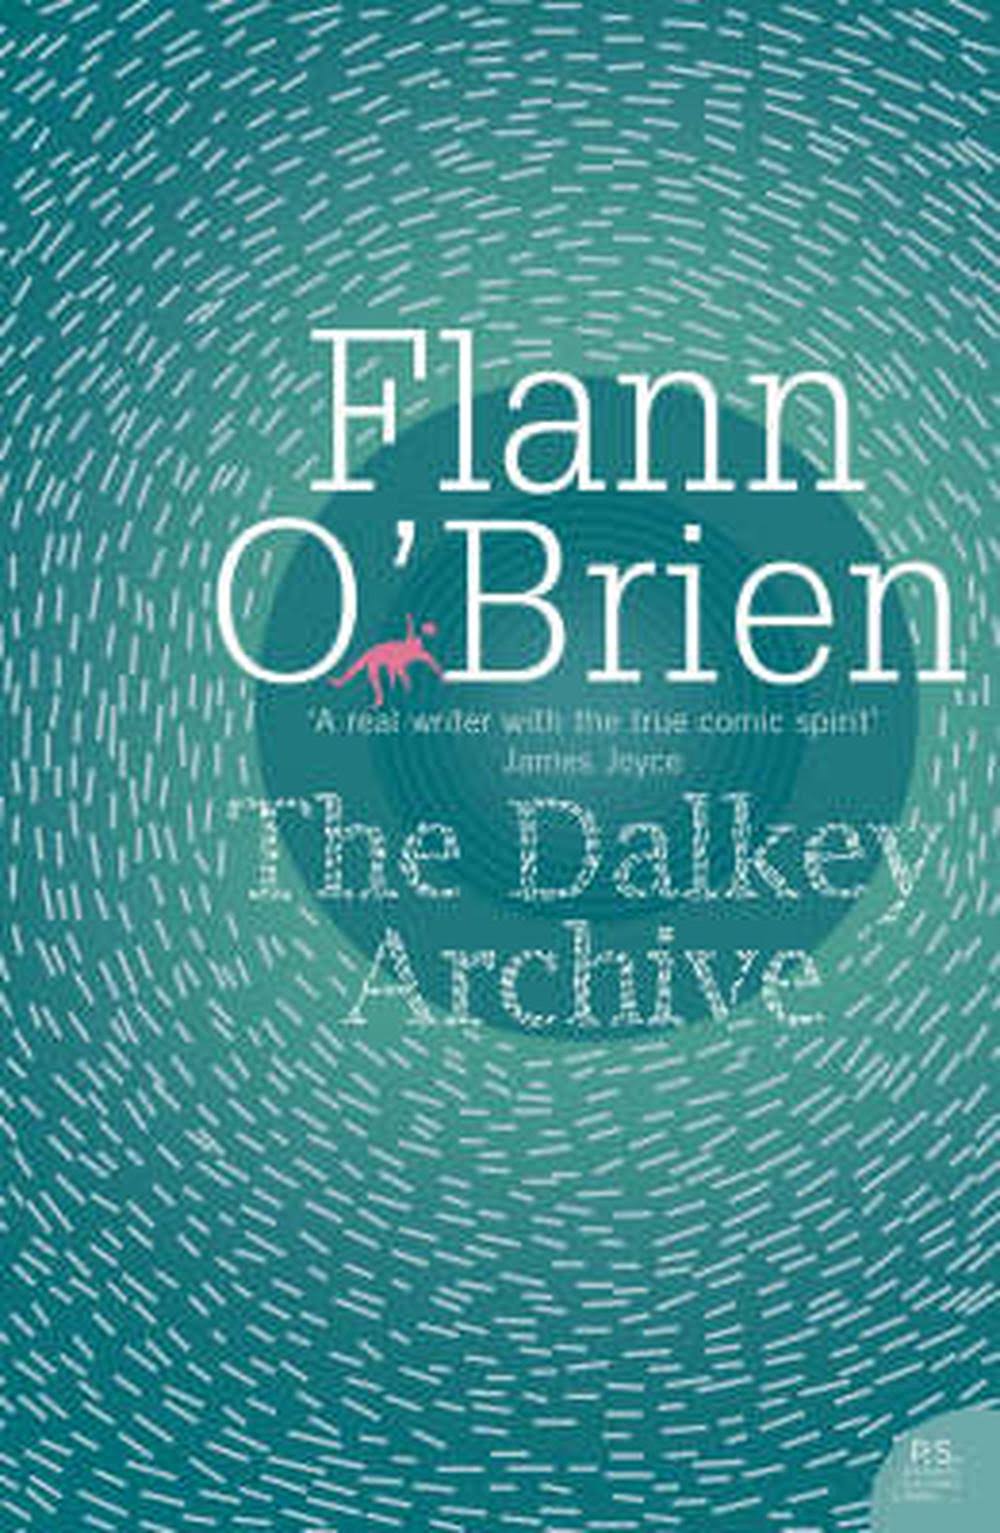 The Dalkey Archive - Flann O'brien